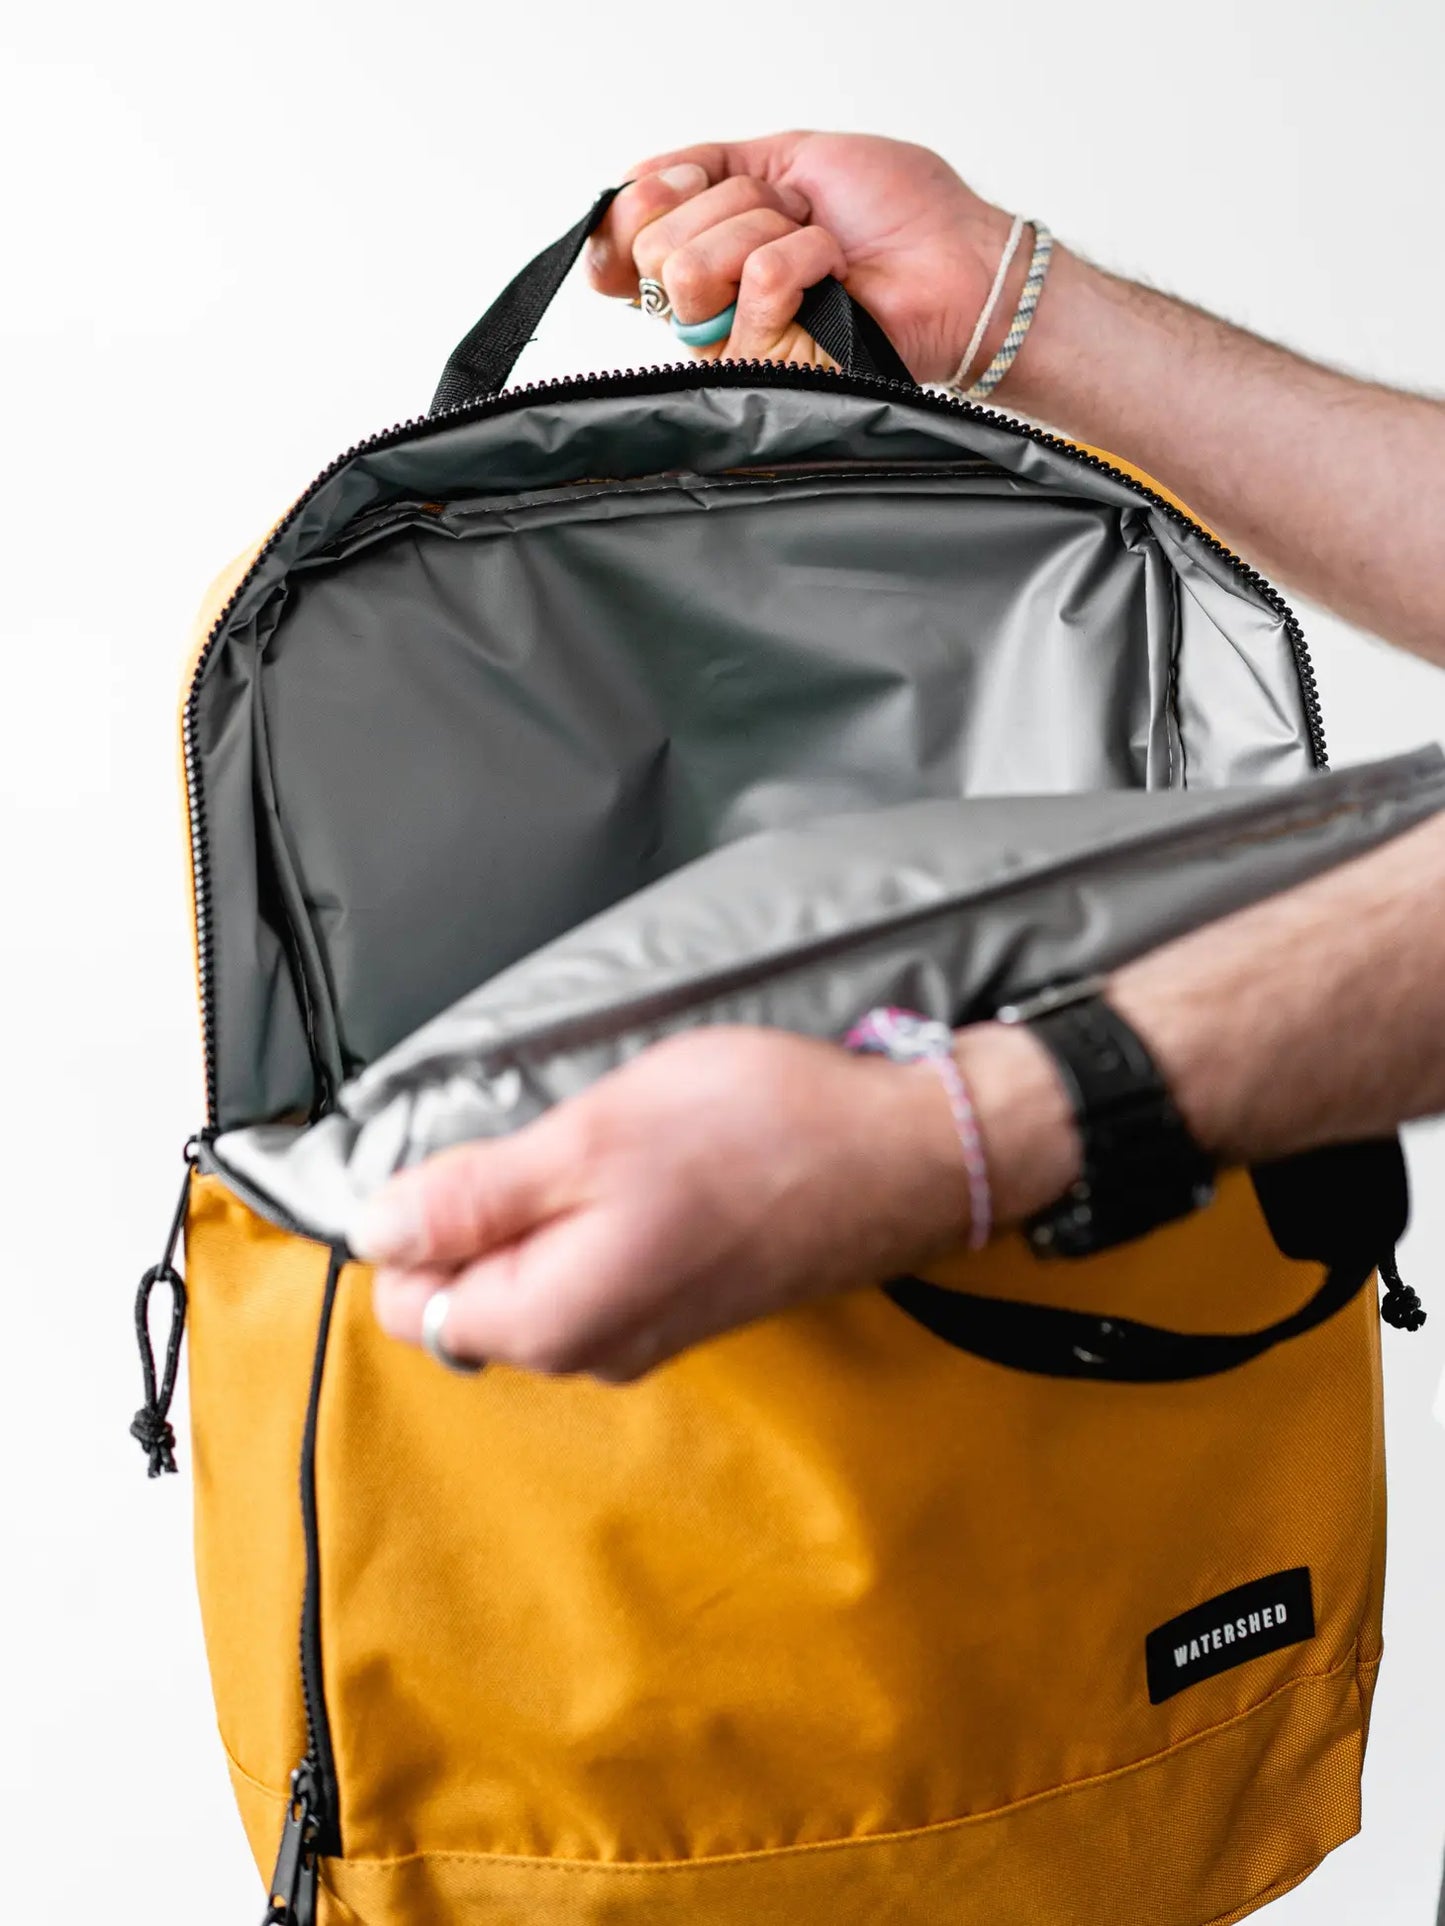 Wayfaring Insulated Cool Bag Backpack - Mustard